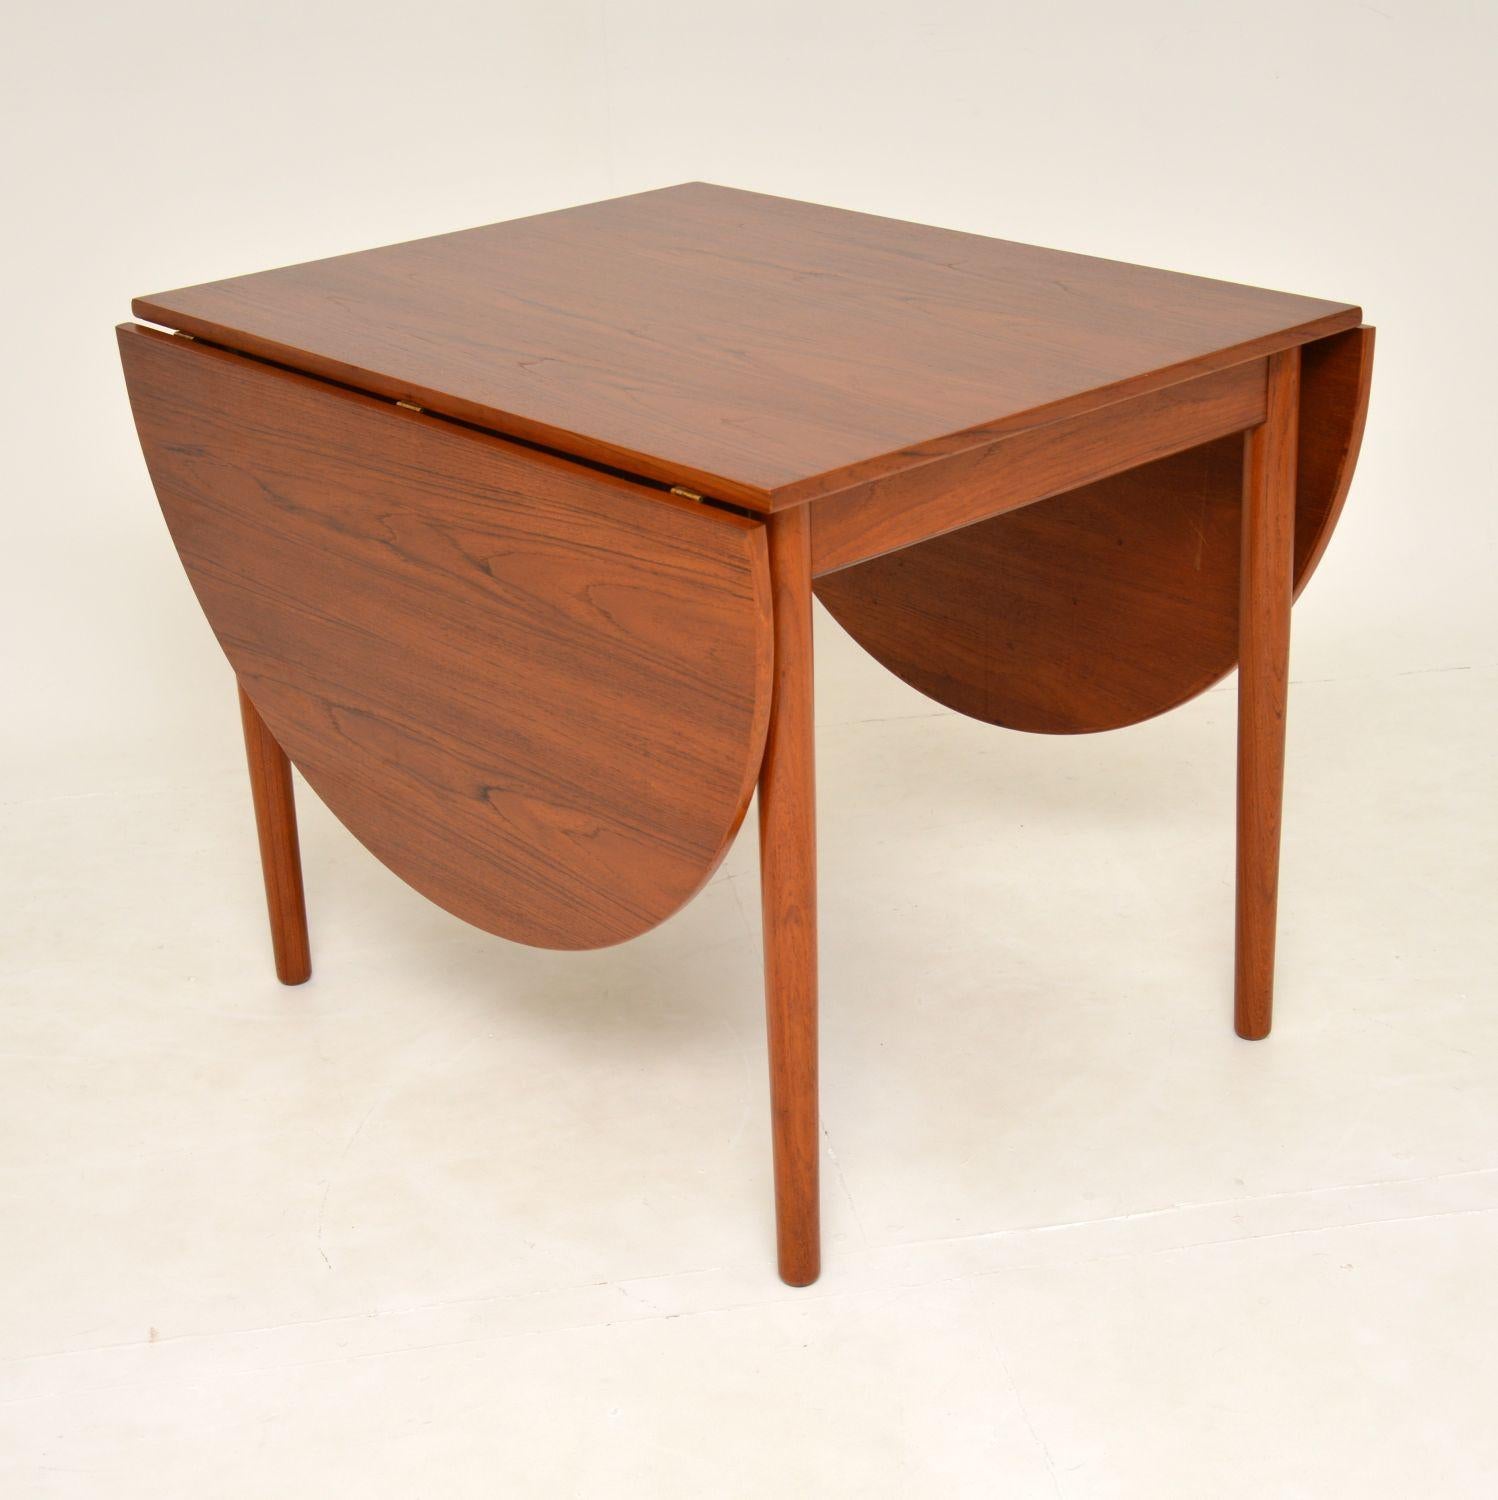 1960s drop leaf table